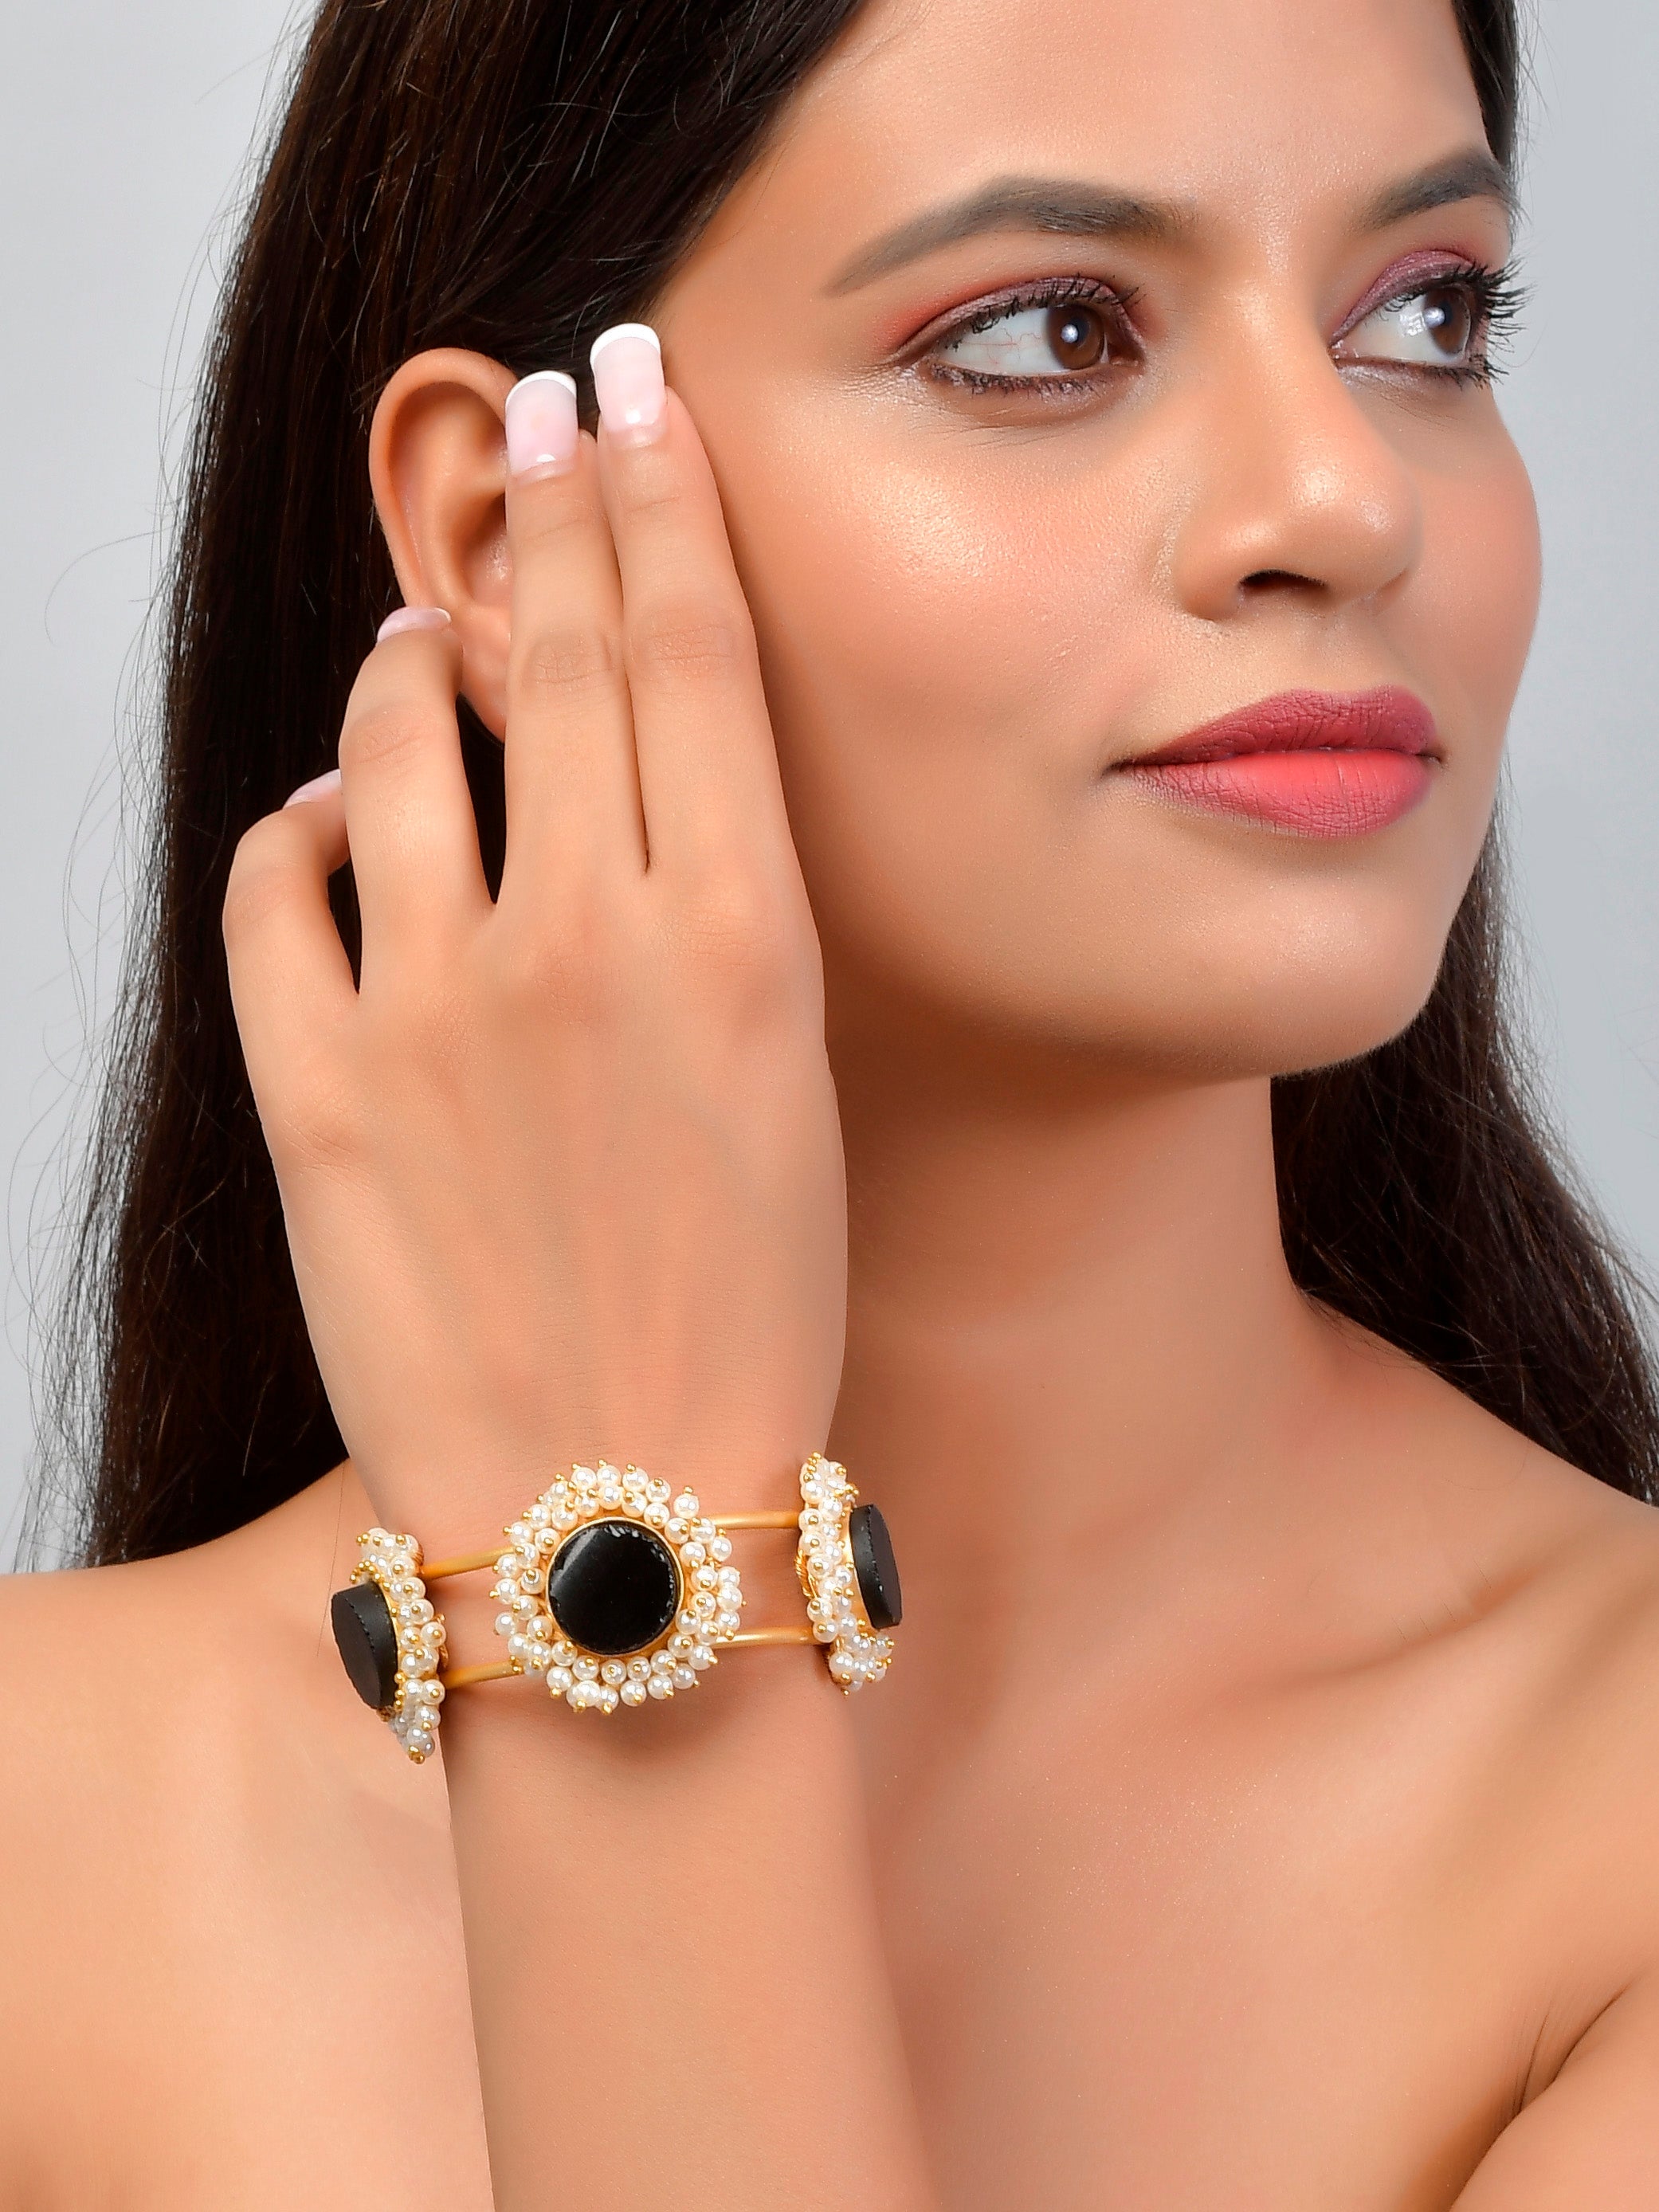 Tiger's Eye Gemstone Macrame Bracelet | Boho Micro-Macrame Natural Crystal  Stone Jewelry | SilverTulips Macrame